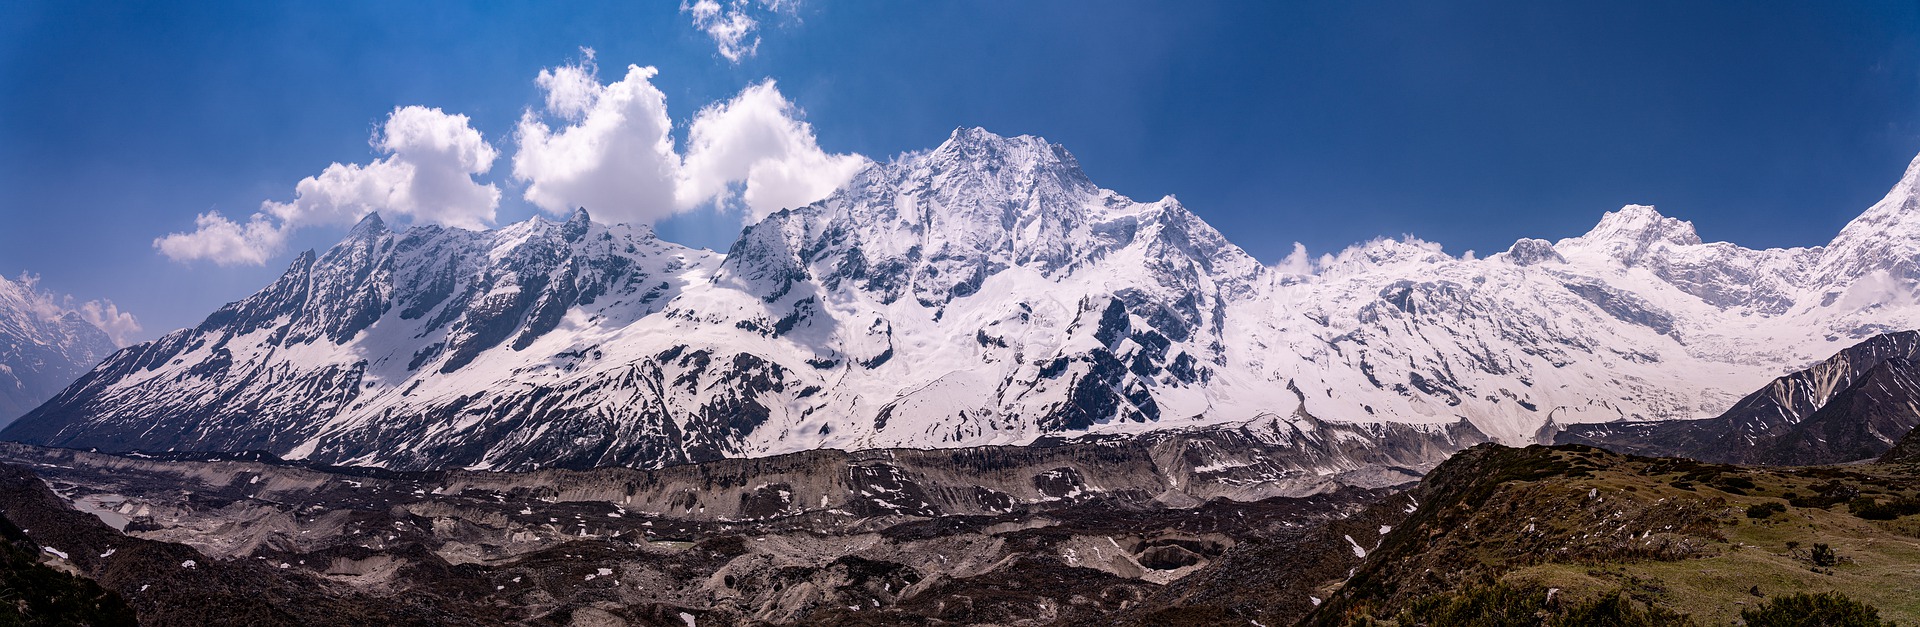 trekking-in-nepal-4377...